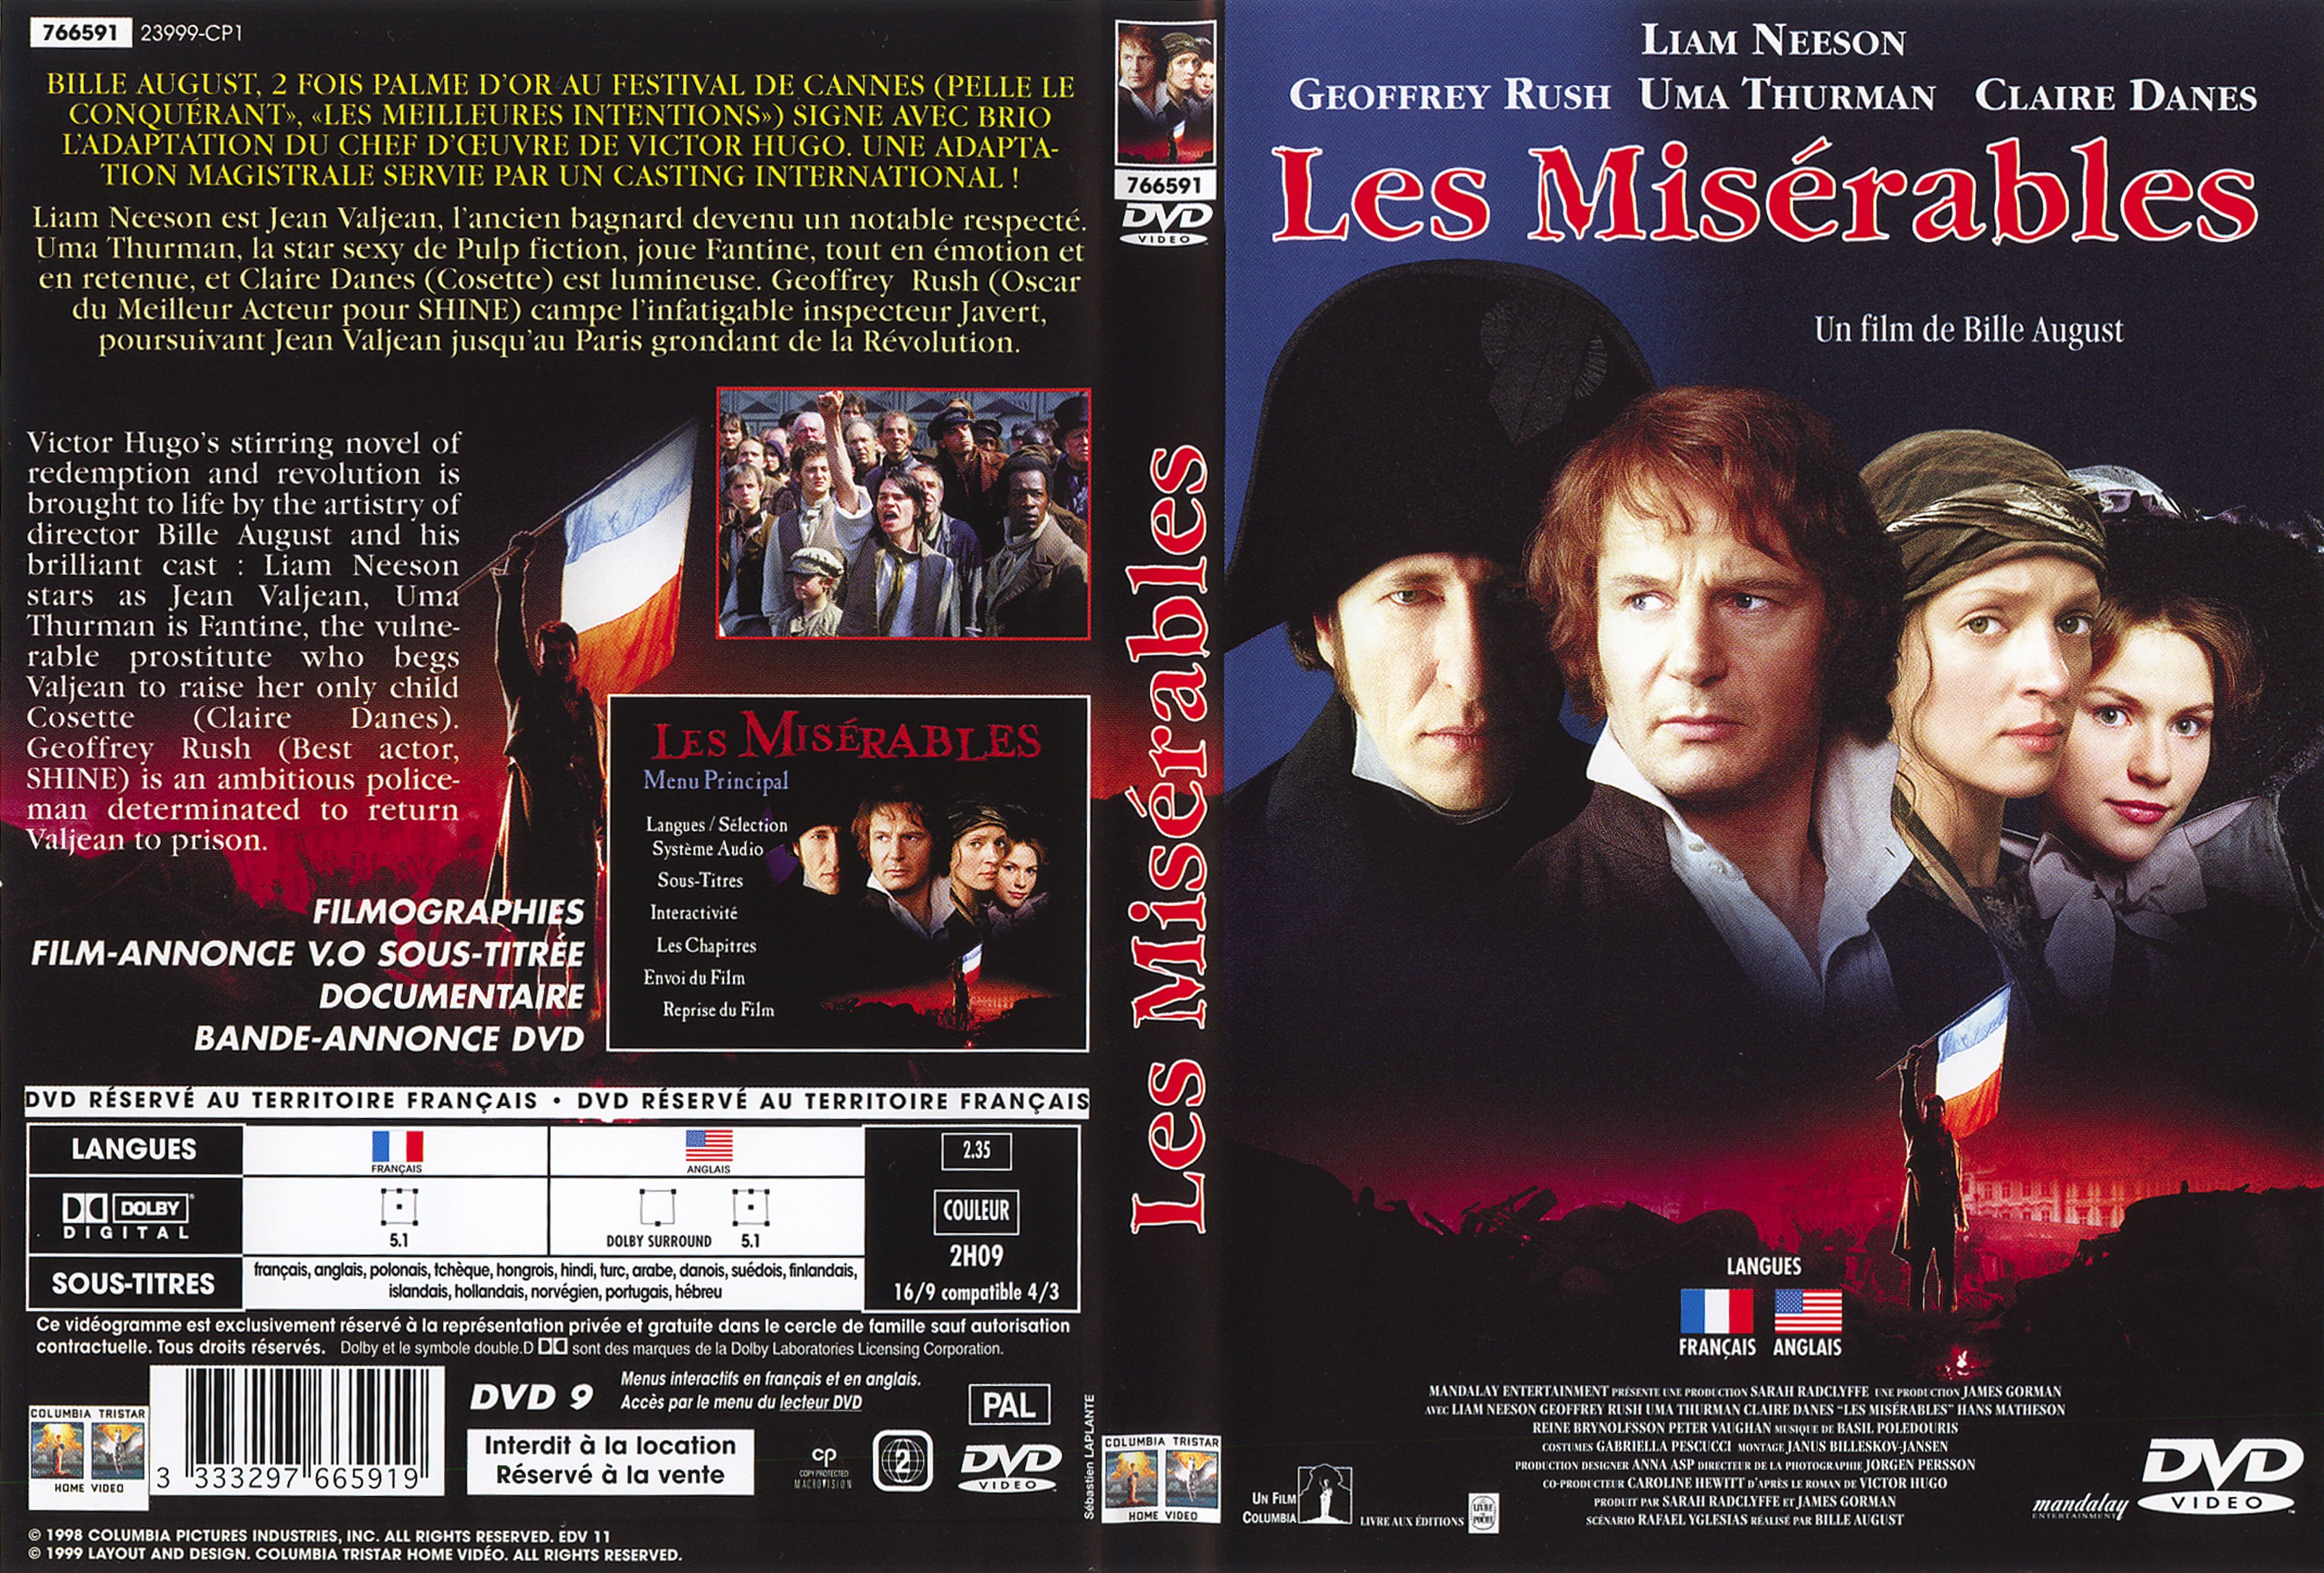 Jaquette DVD Les misrables (Neeson)